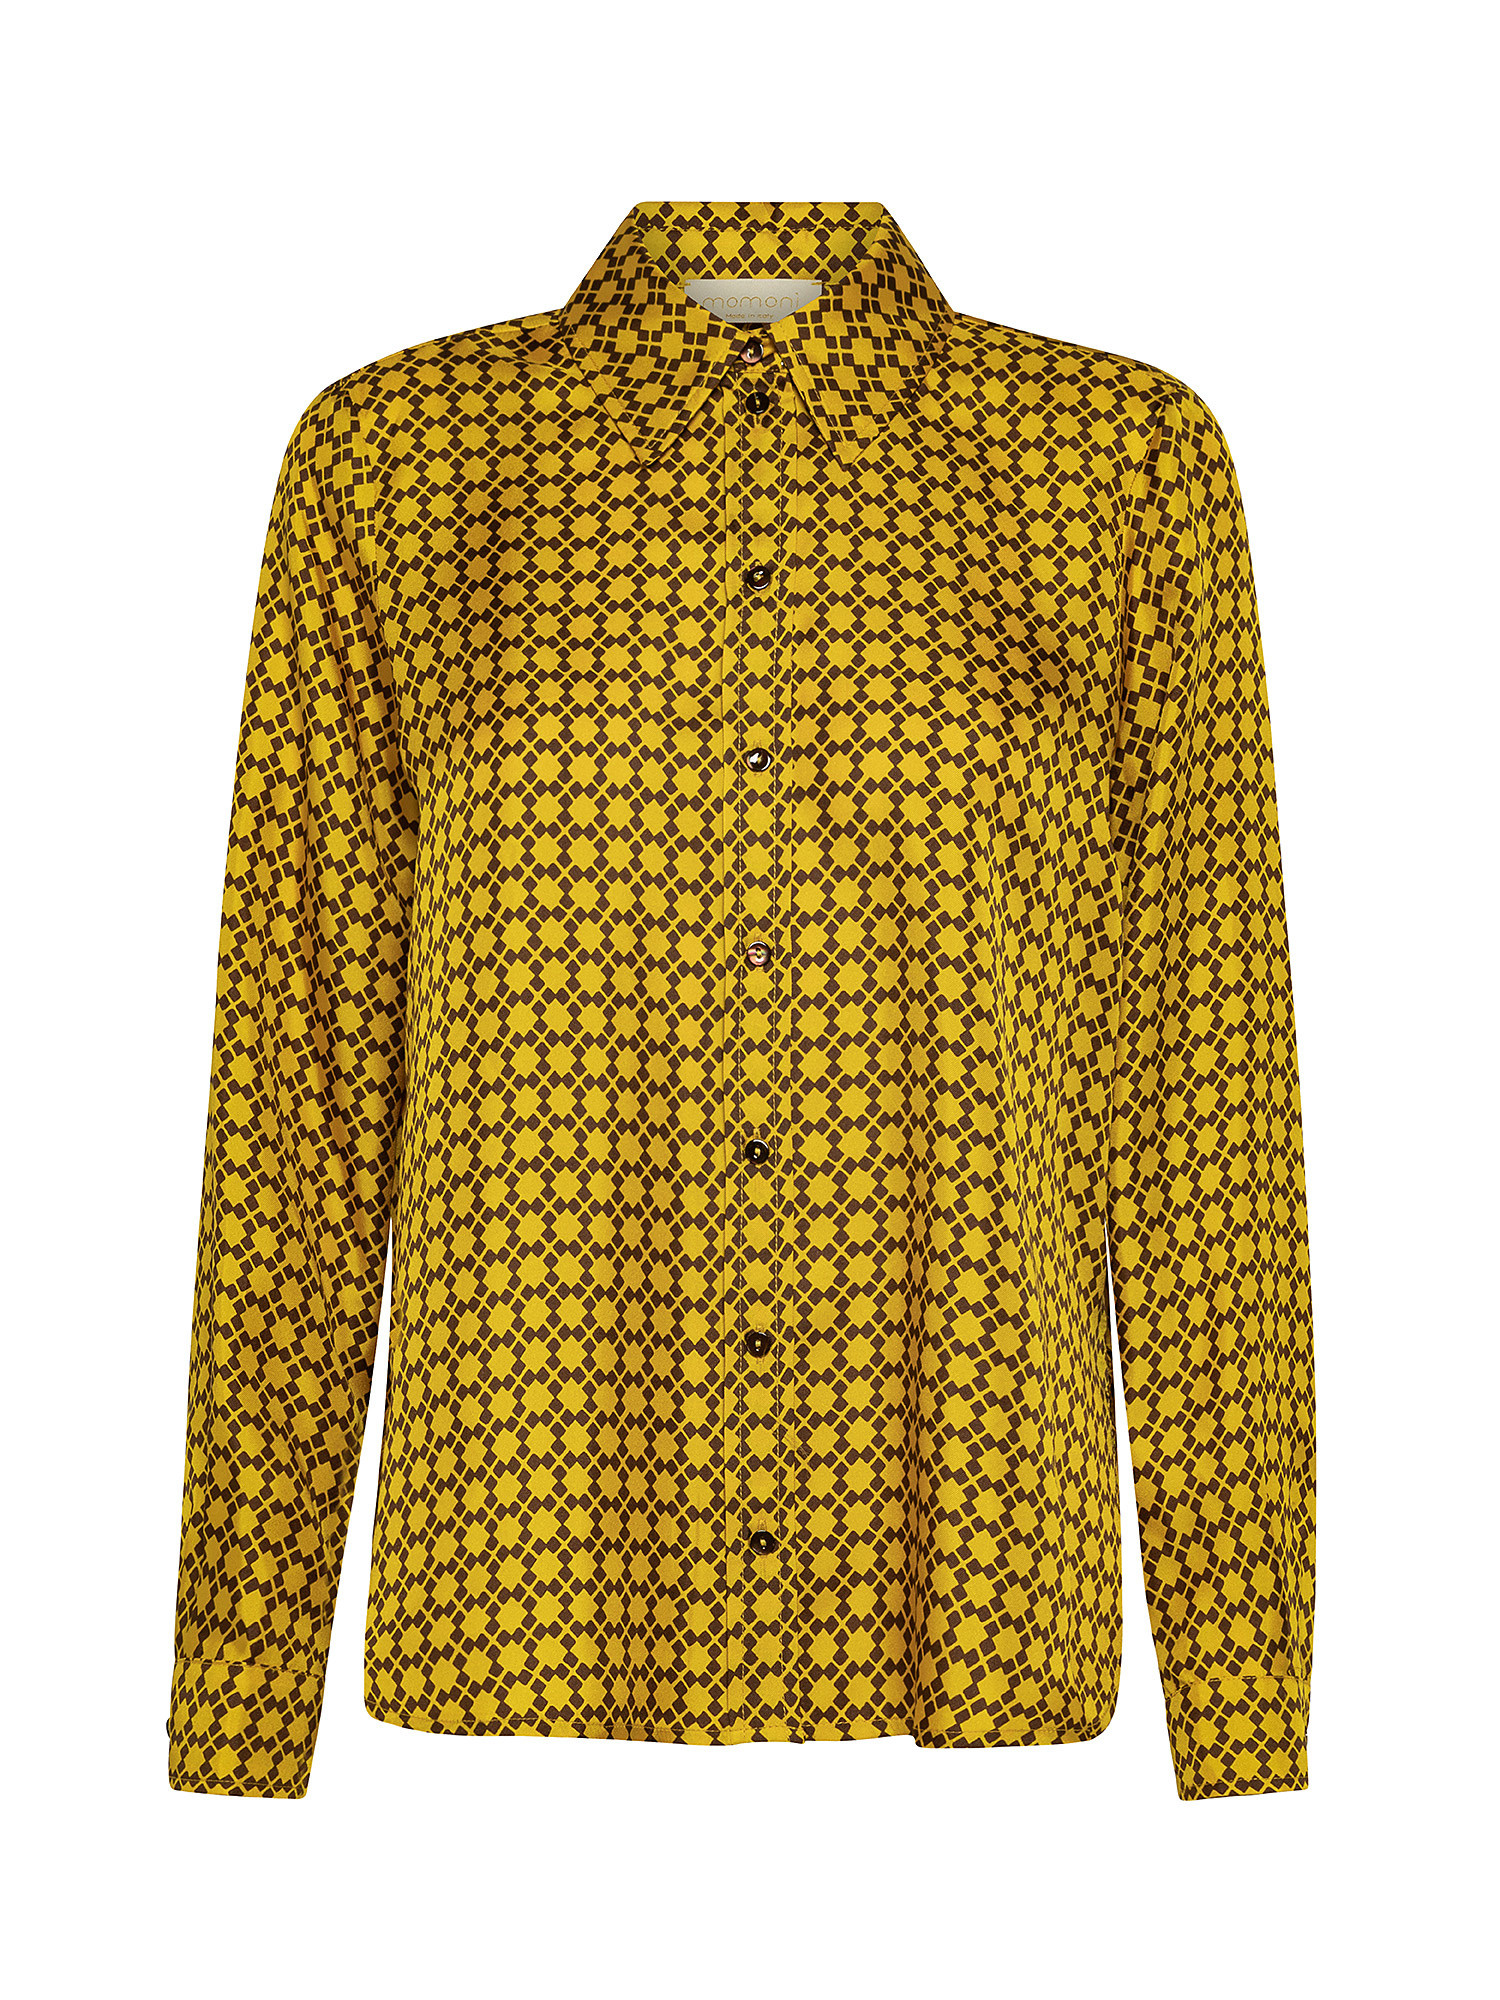 Camicia con stampa in twill di seta, Yellow, large image number 0